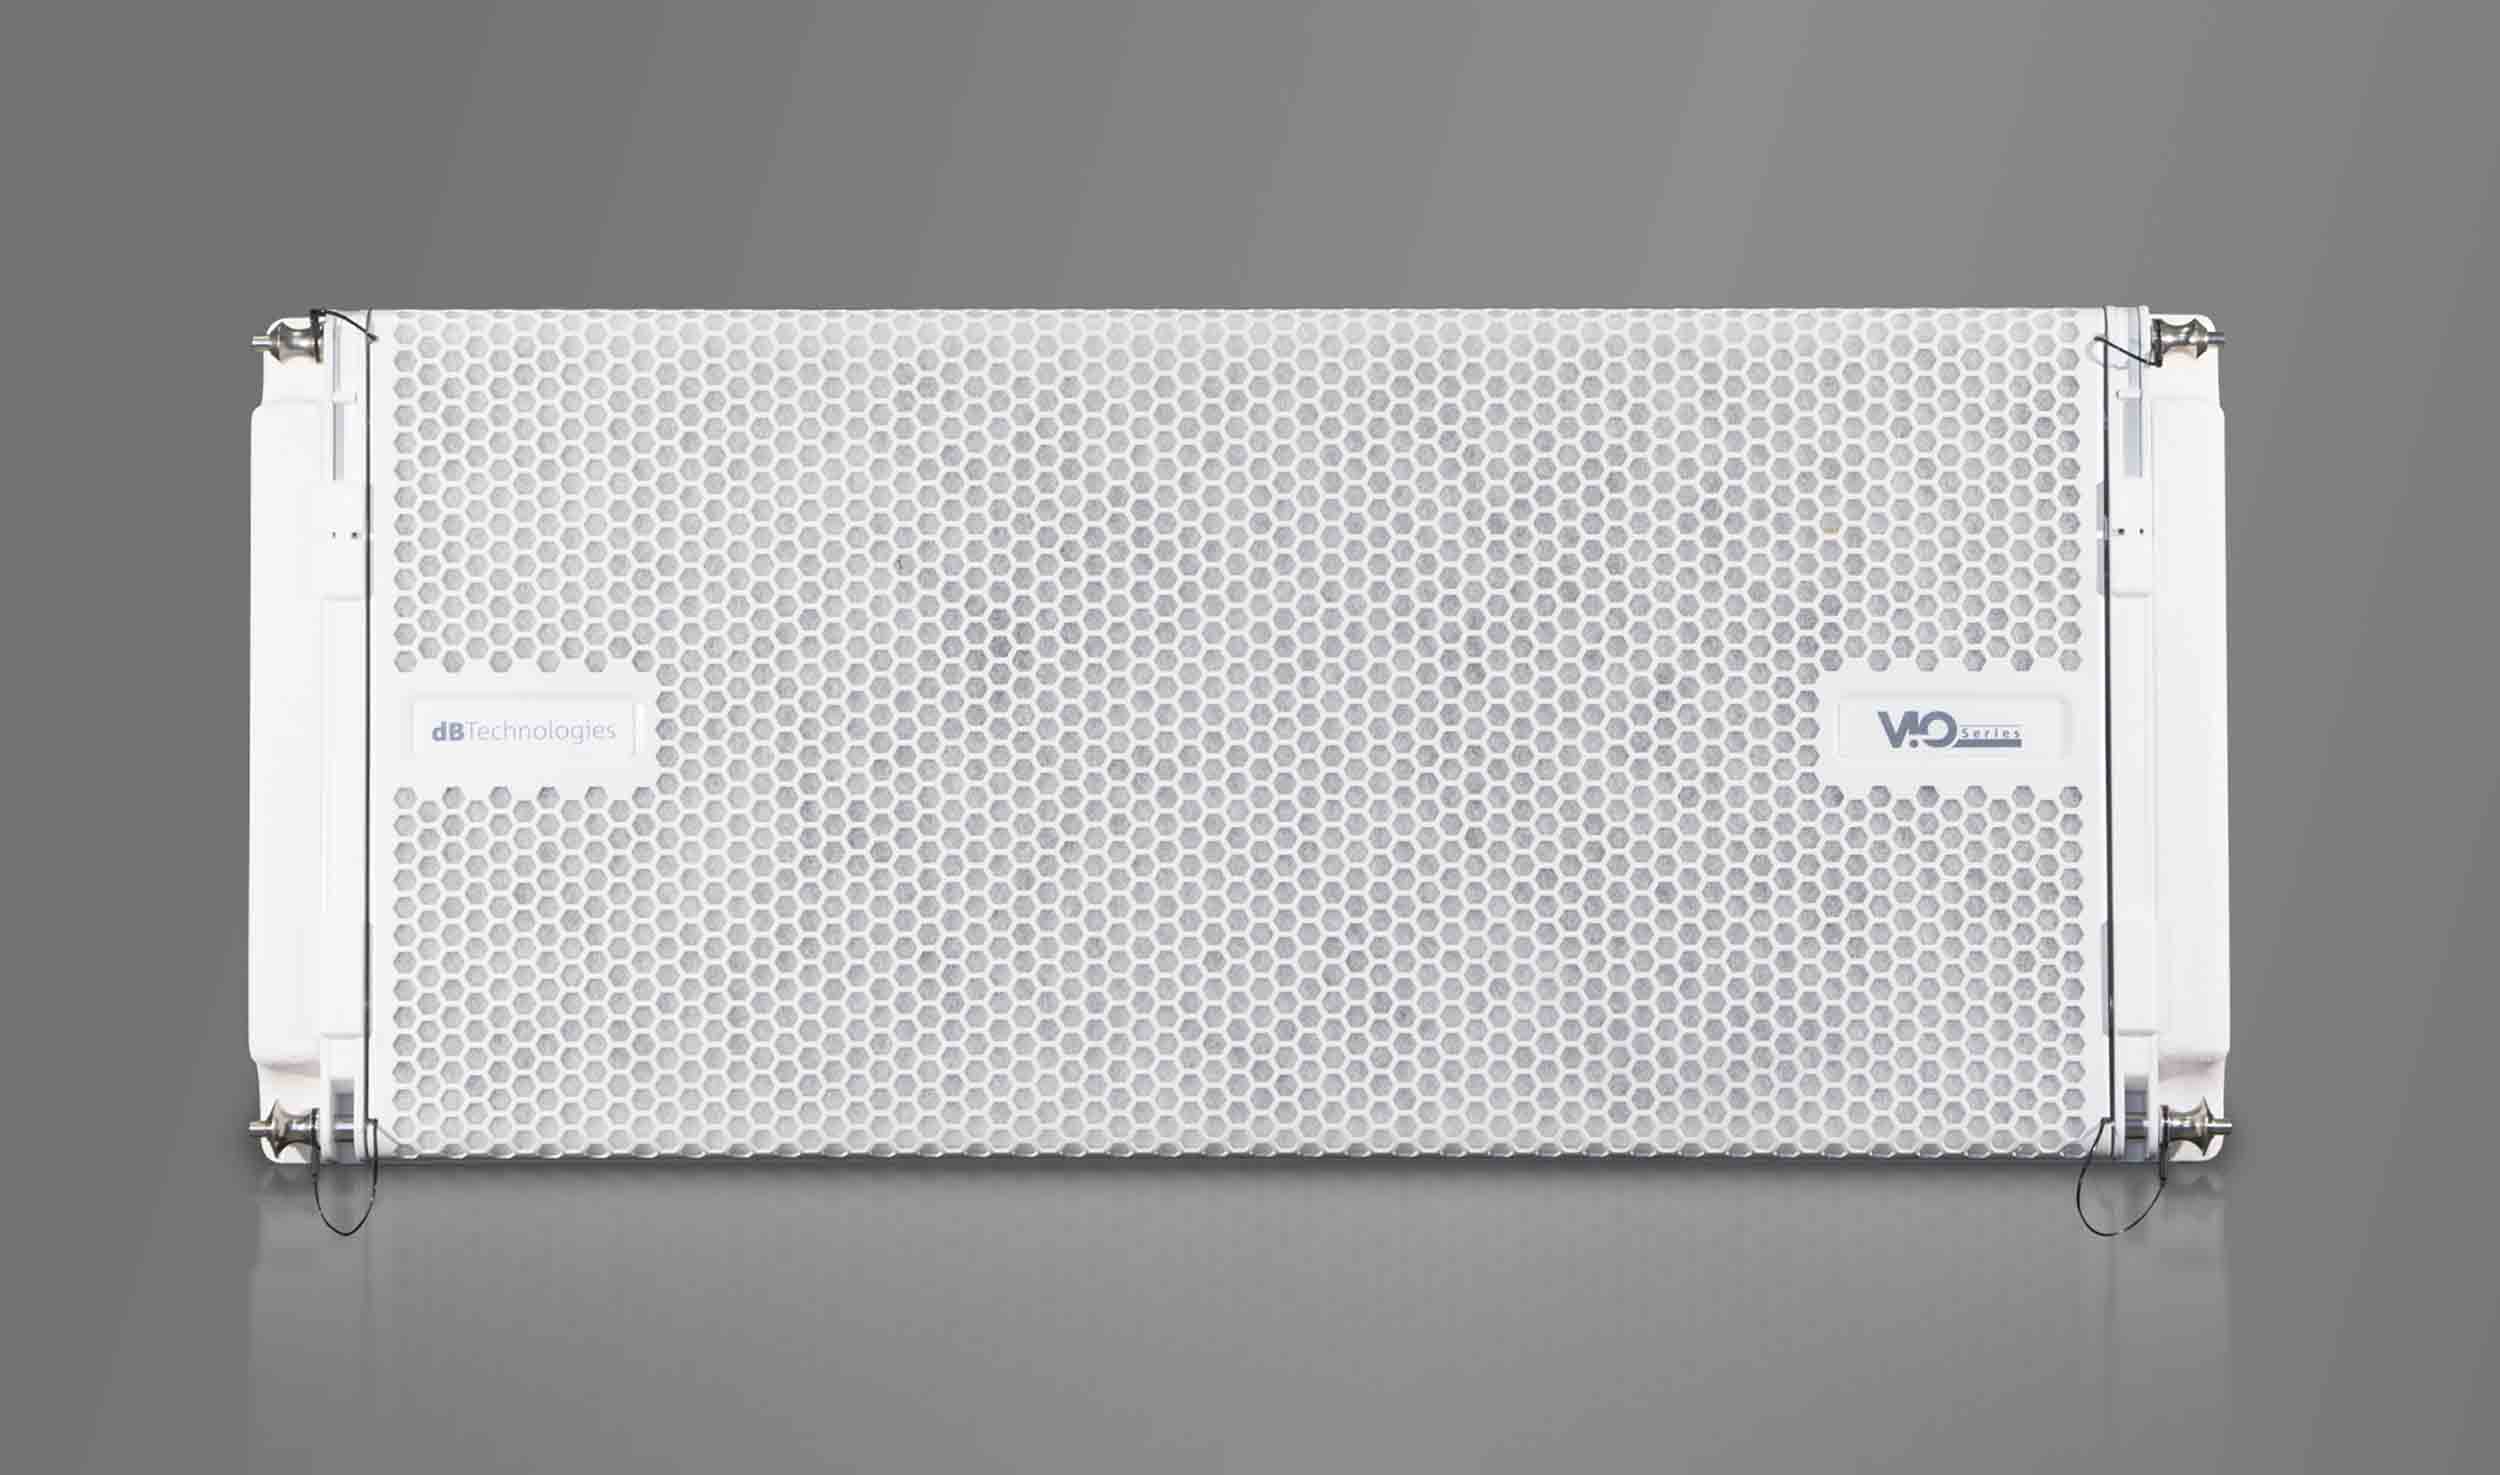 dB Technologies VIO L210 WHITE, 10" 2-Way Active Line Array Module 1800W - White - Hollywood DJ